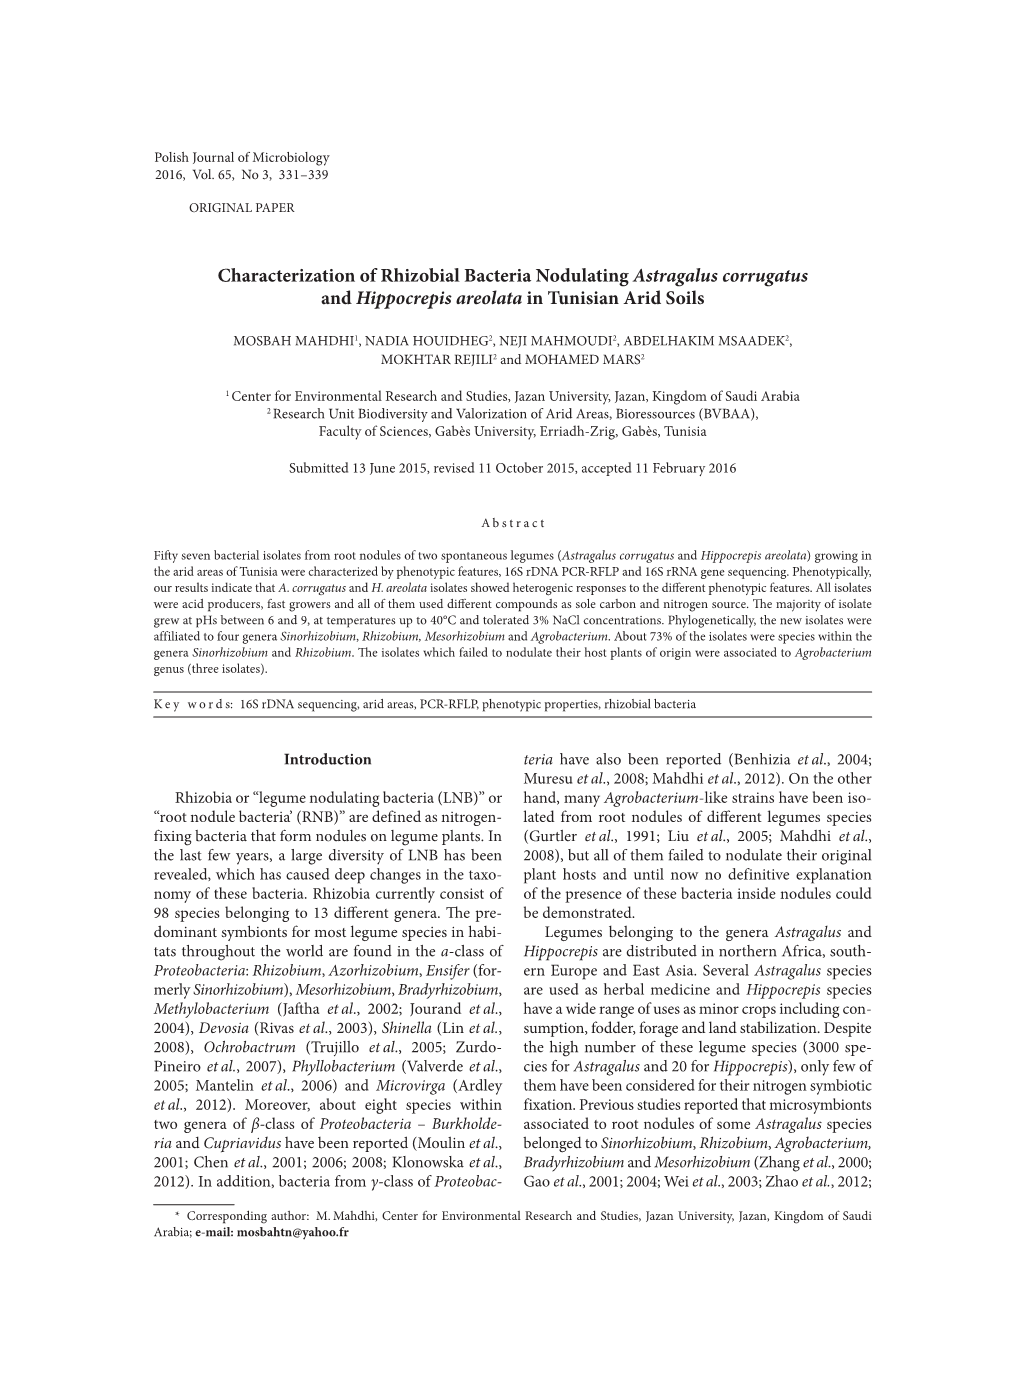 Characterization of Rhizobial Bacteria Nodulating Astragalus Corrugatus and Hippocrepis Areolata in Tunisian Arid Soils